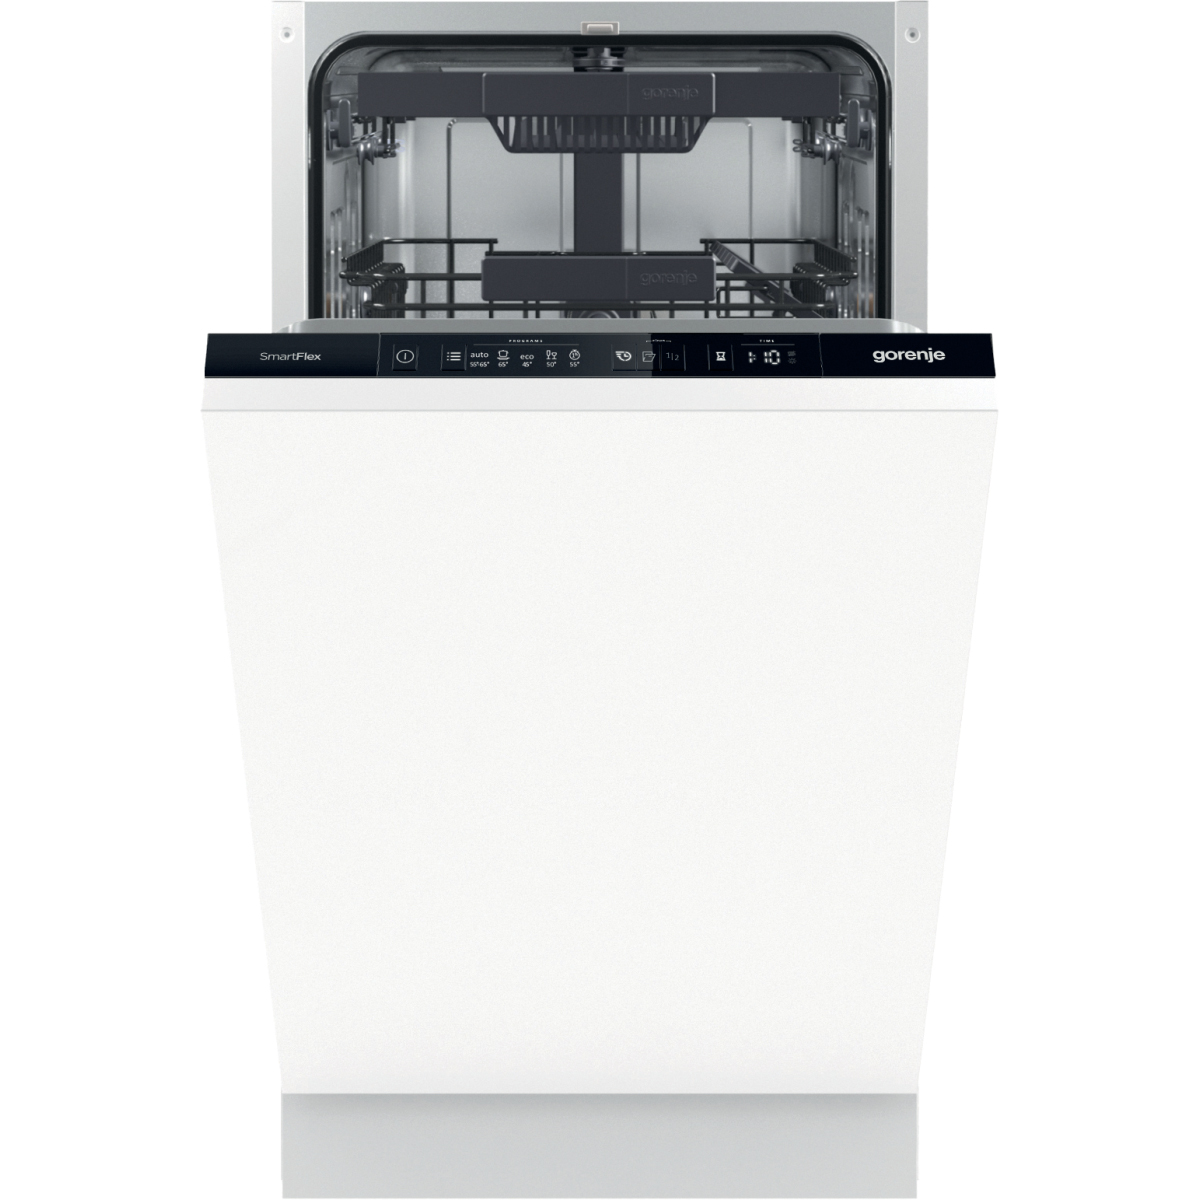 Посудомоечная машина Gorenje GV561D11 посудомоечная машина gorenje gs520e15s